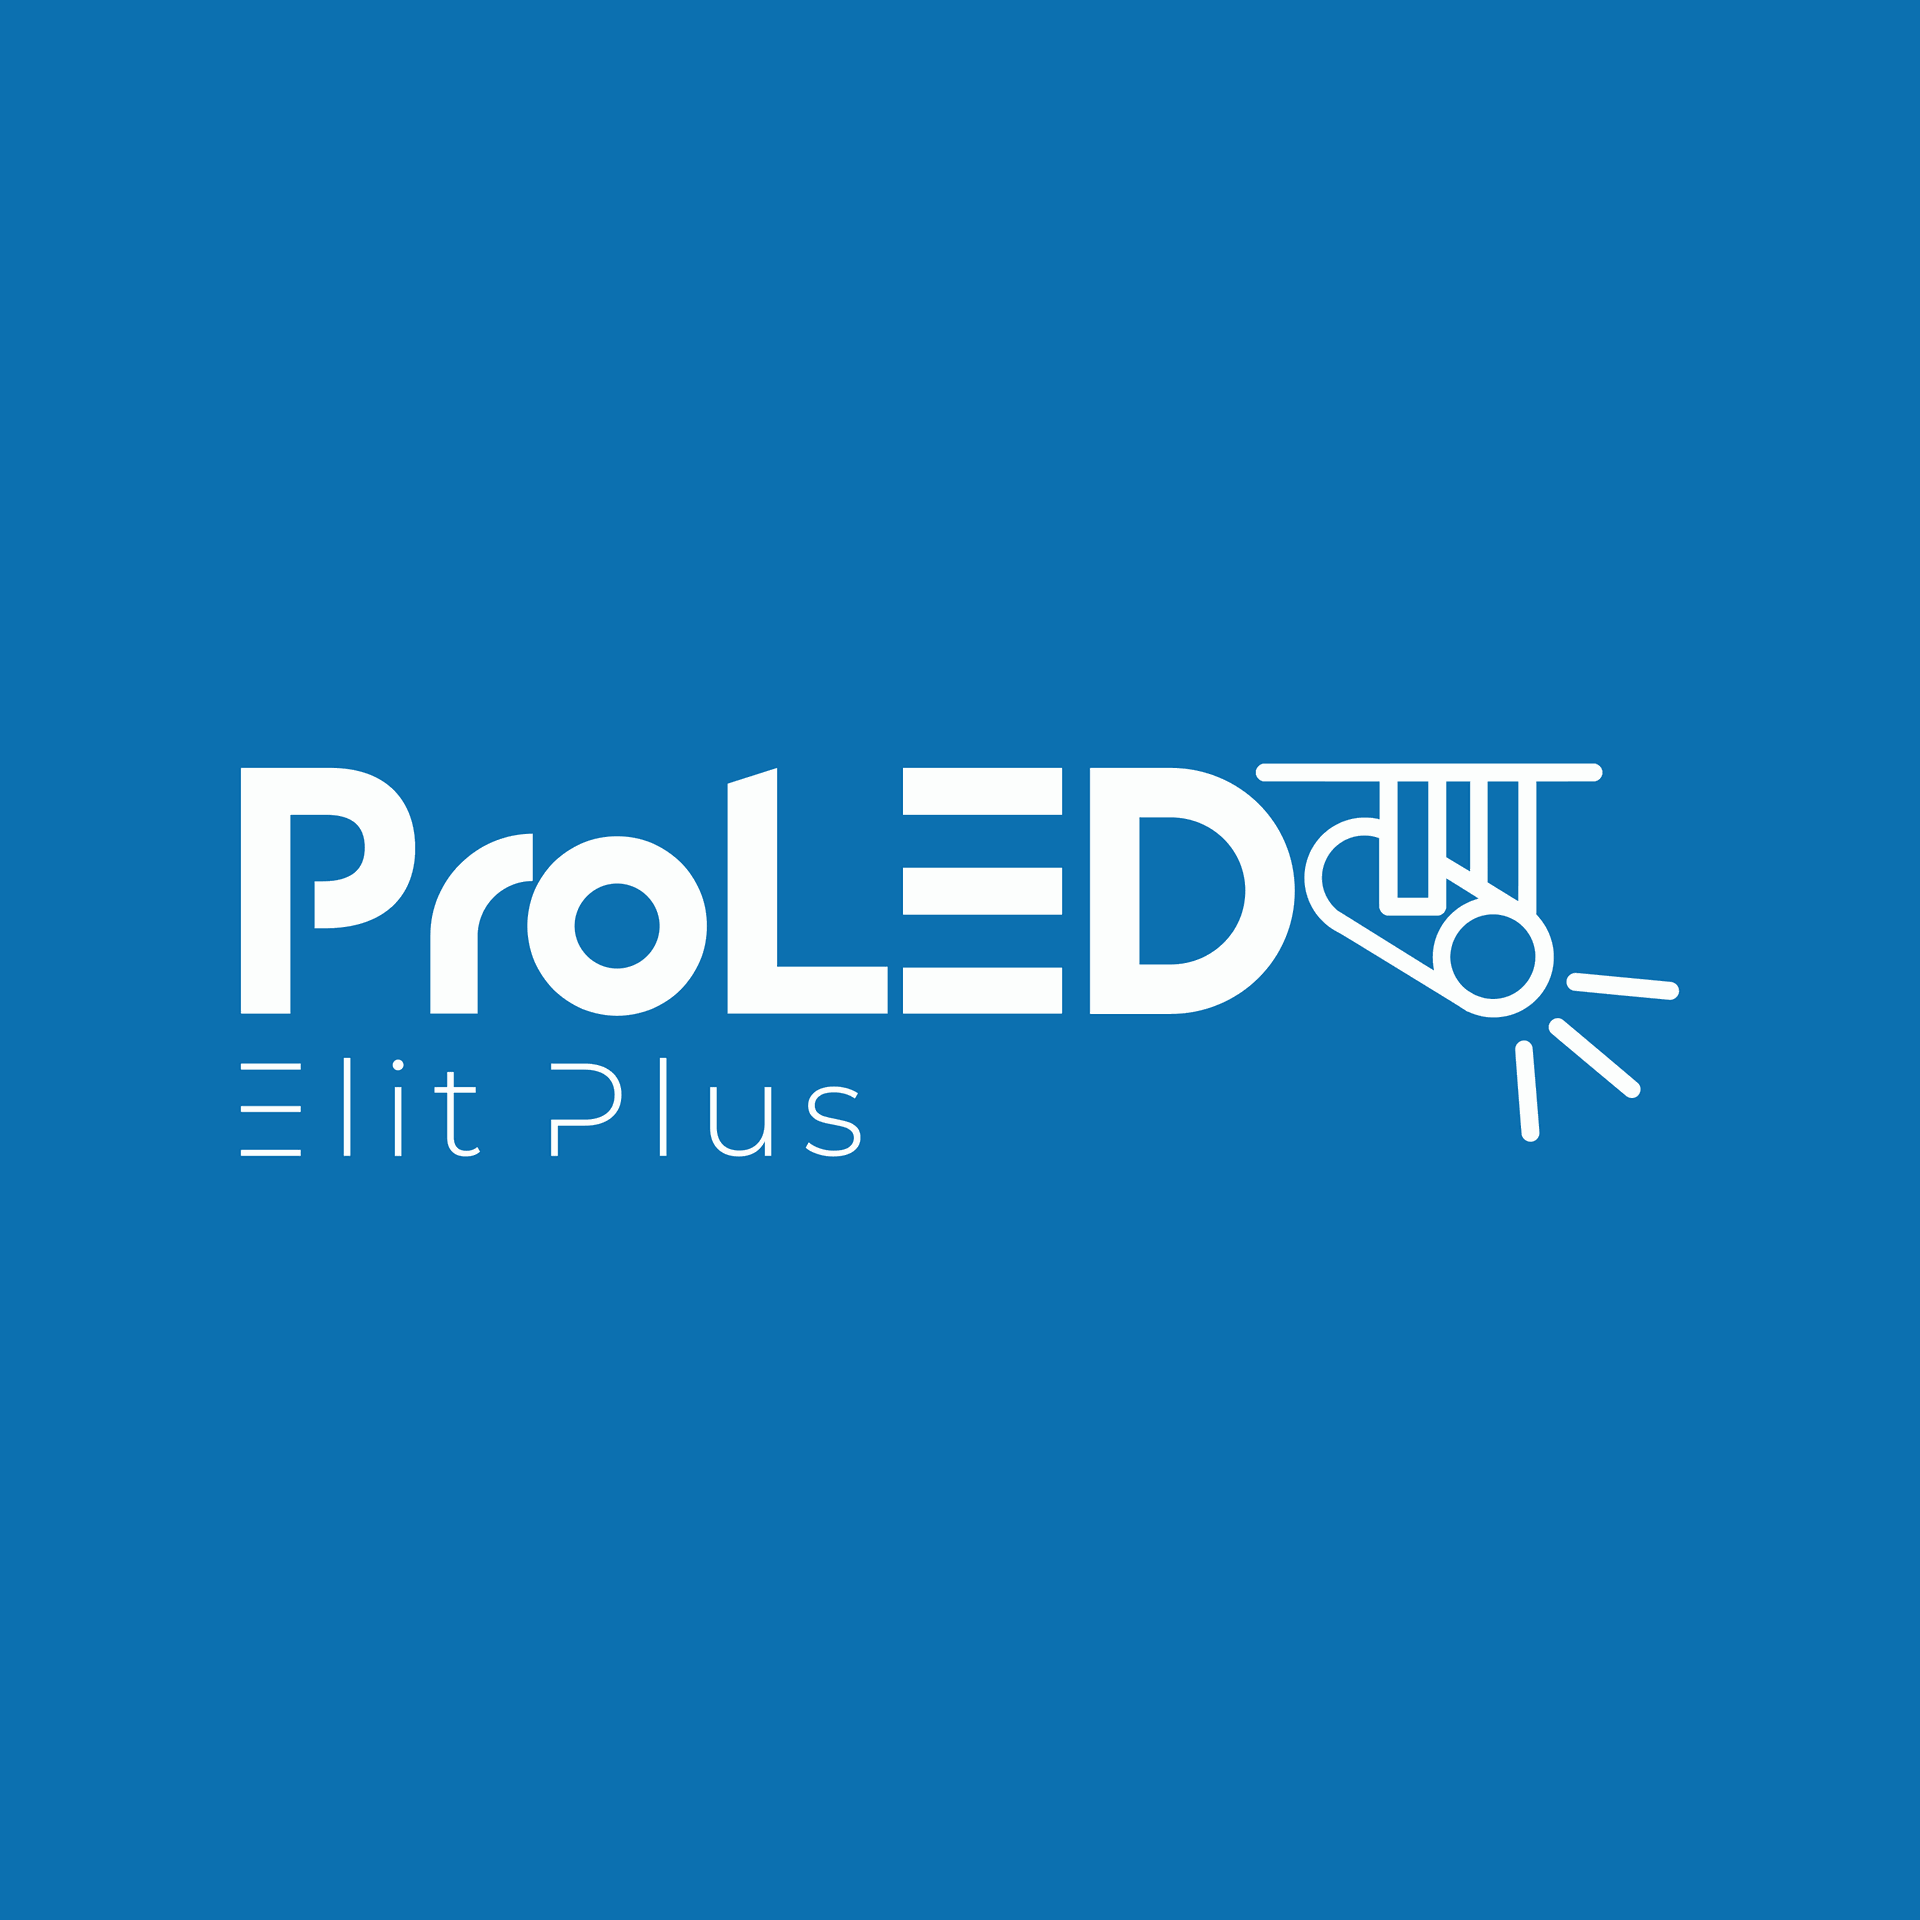 Brand: ProLed